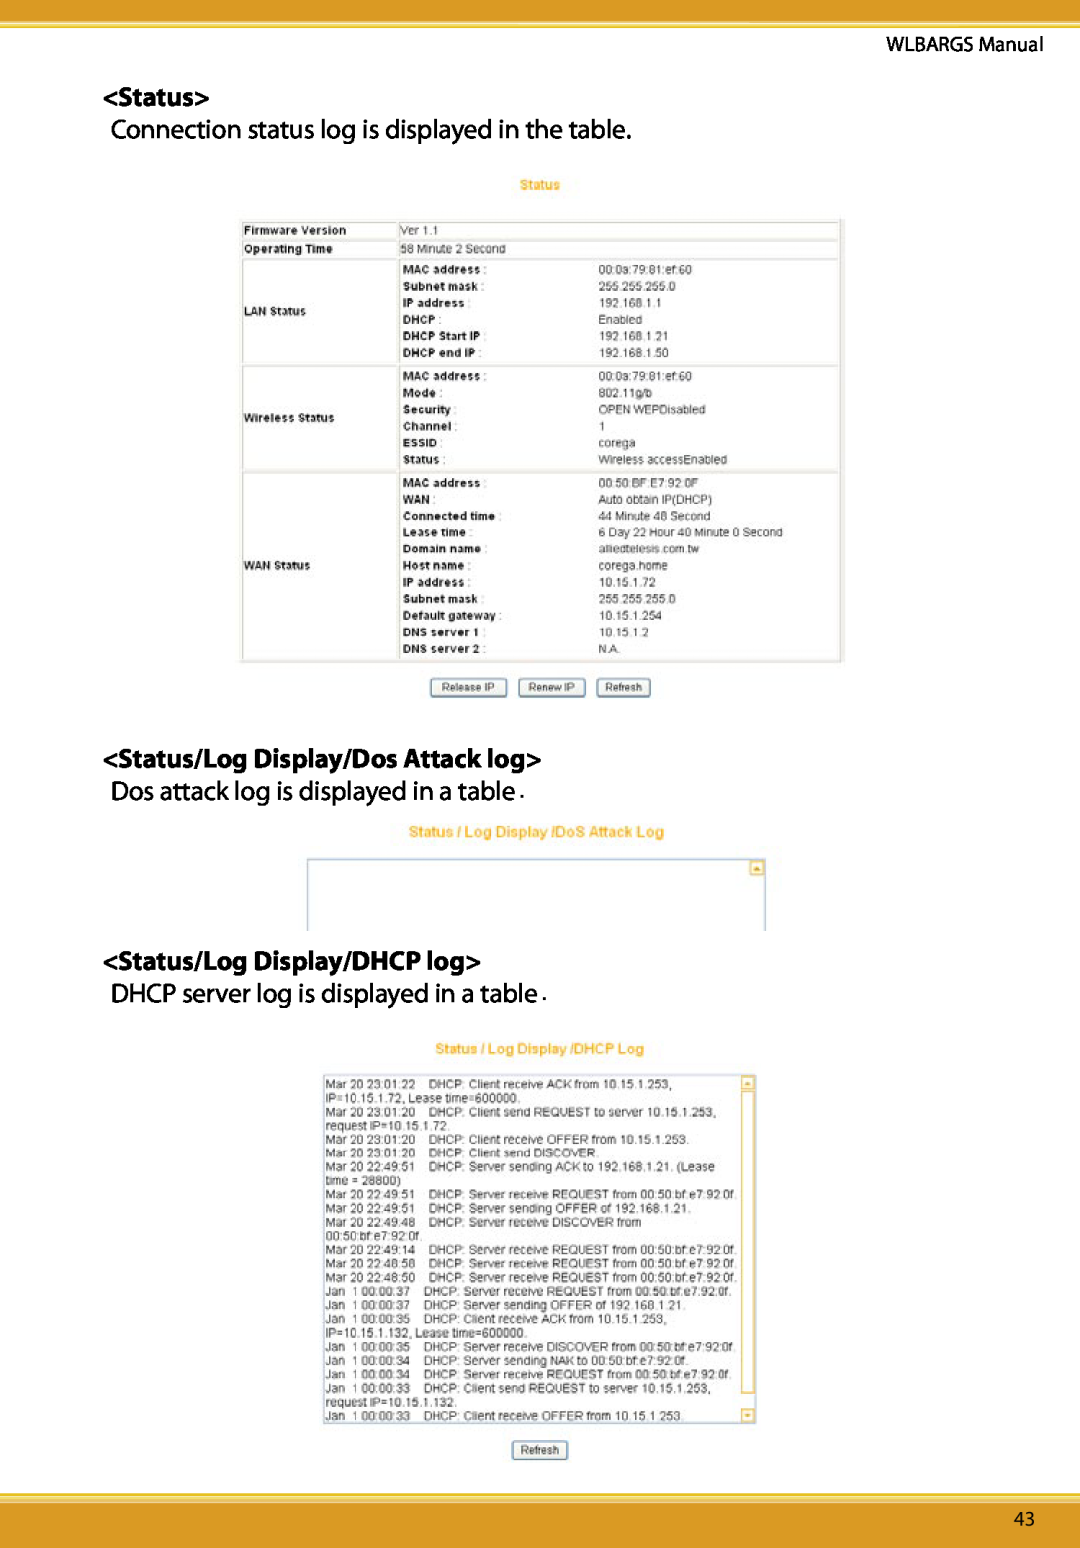 Allied Telesis CG-WLBARGS manual Status/Log Display/Dos Attack log, Status/Log Display/DHCP log, WLBARGS Manual 